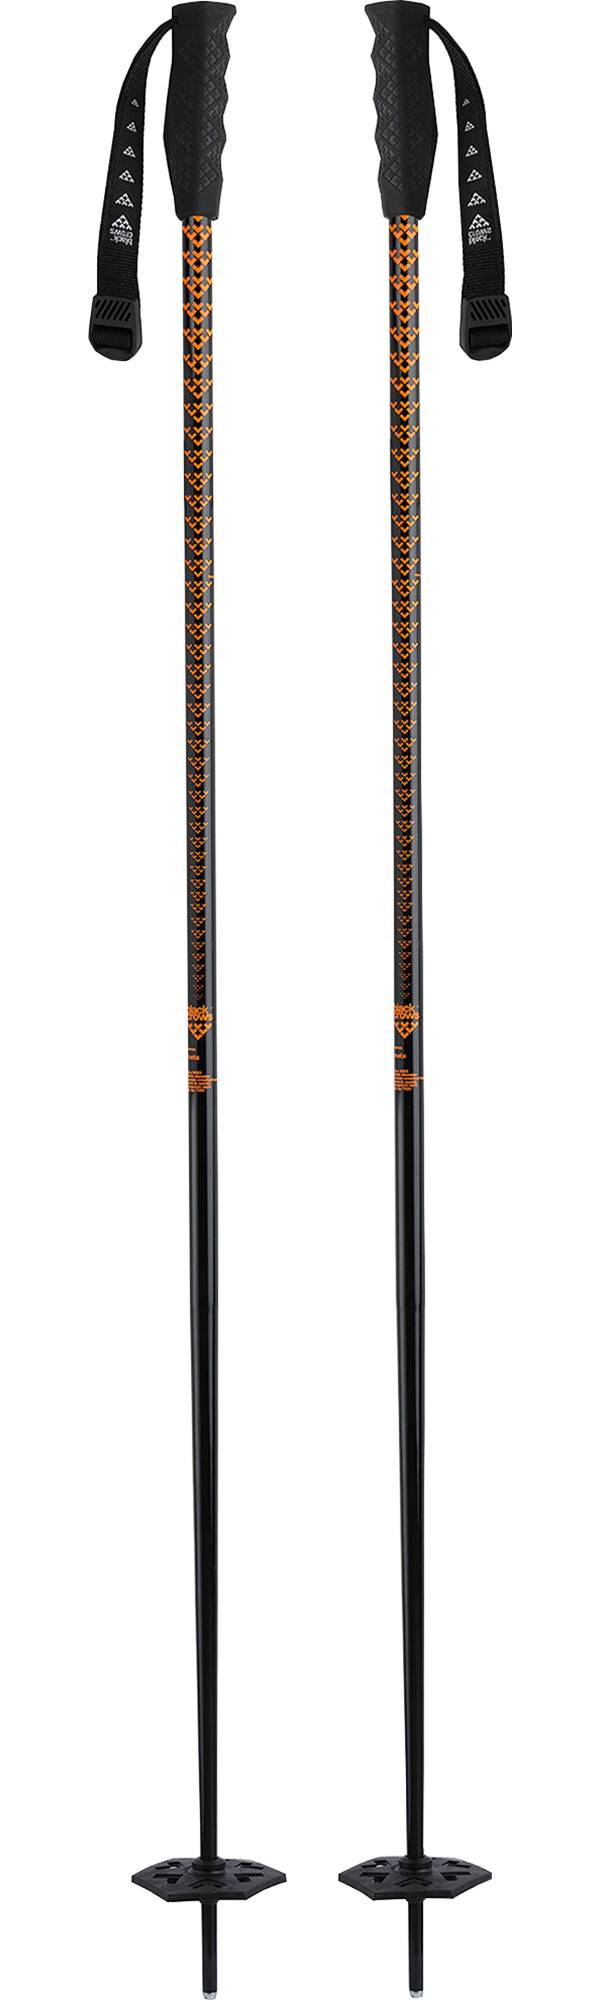 blackcrows '23-'24 Adult Meta Ski Poles product image